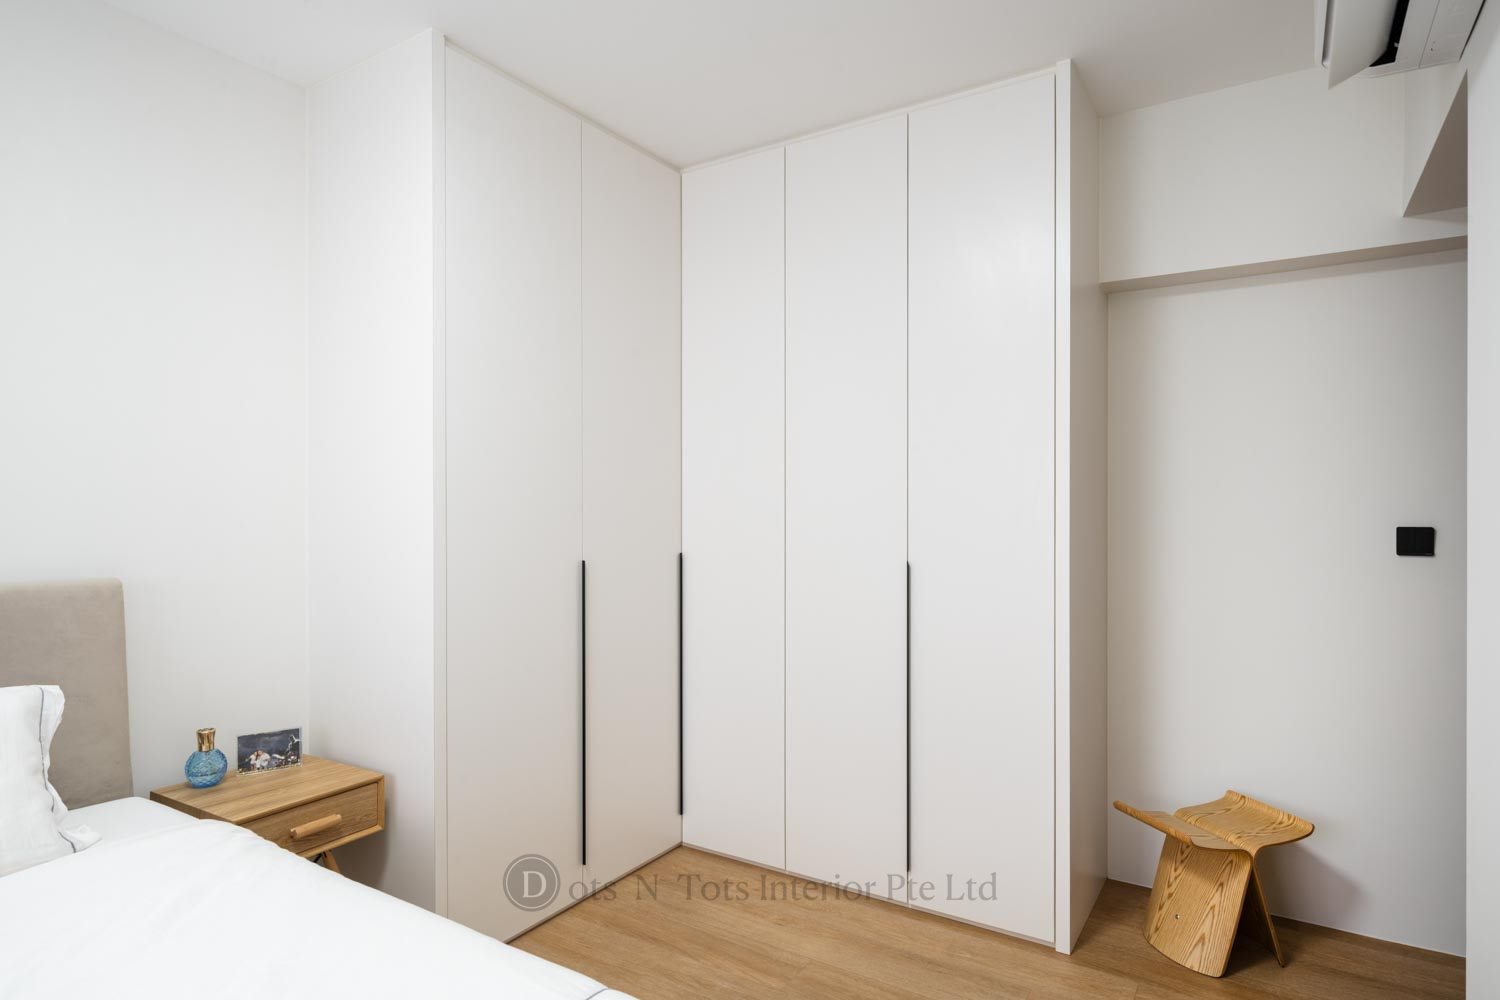 Contemporary, Minimalist, Modern Design - Bedroom - HDB 4 Room - Design by Dots n Tots Interior Pte Ltd